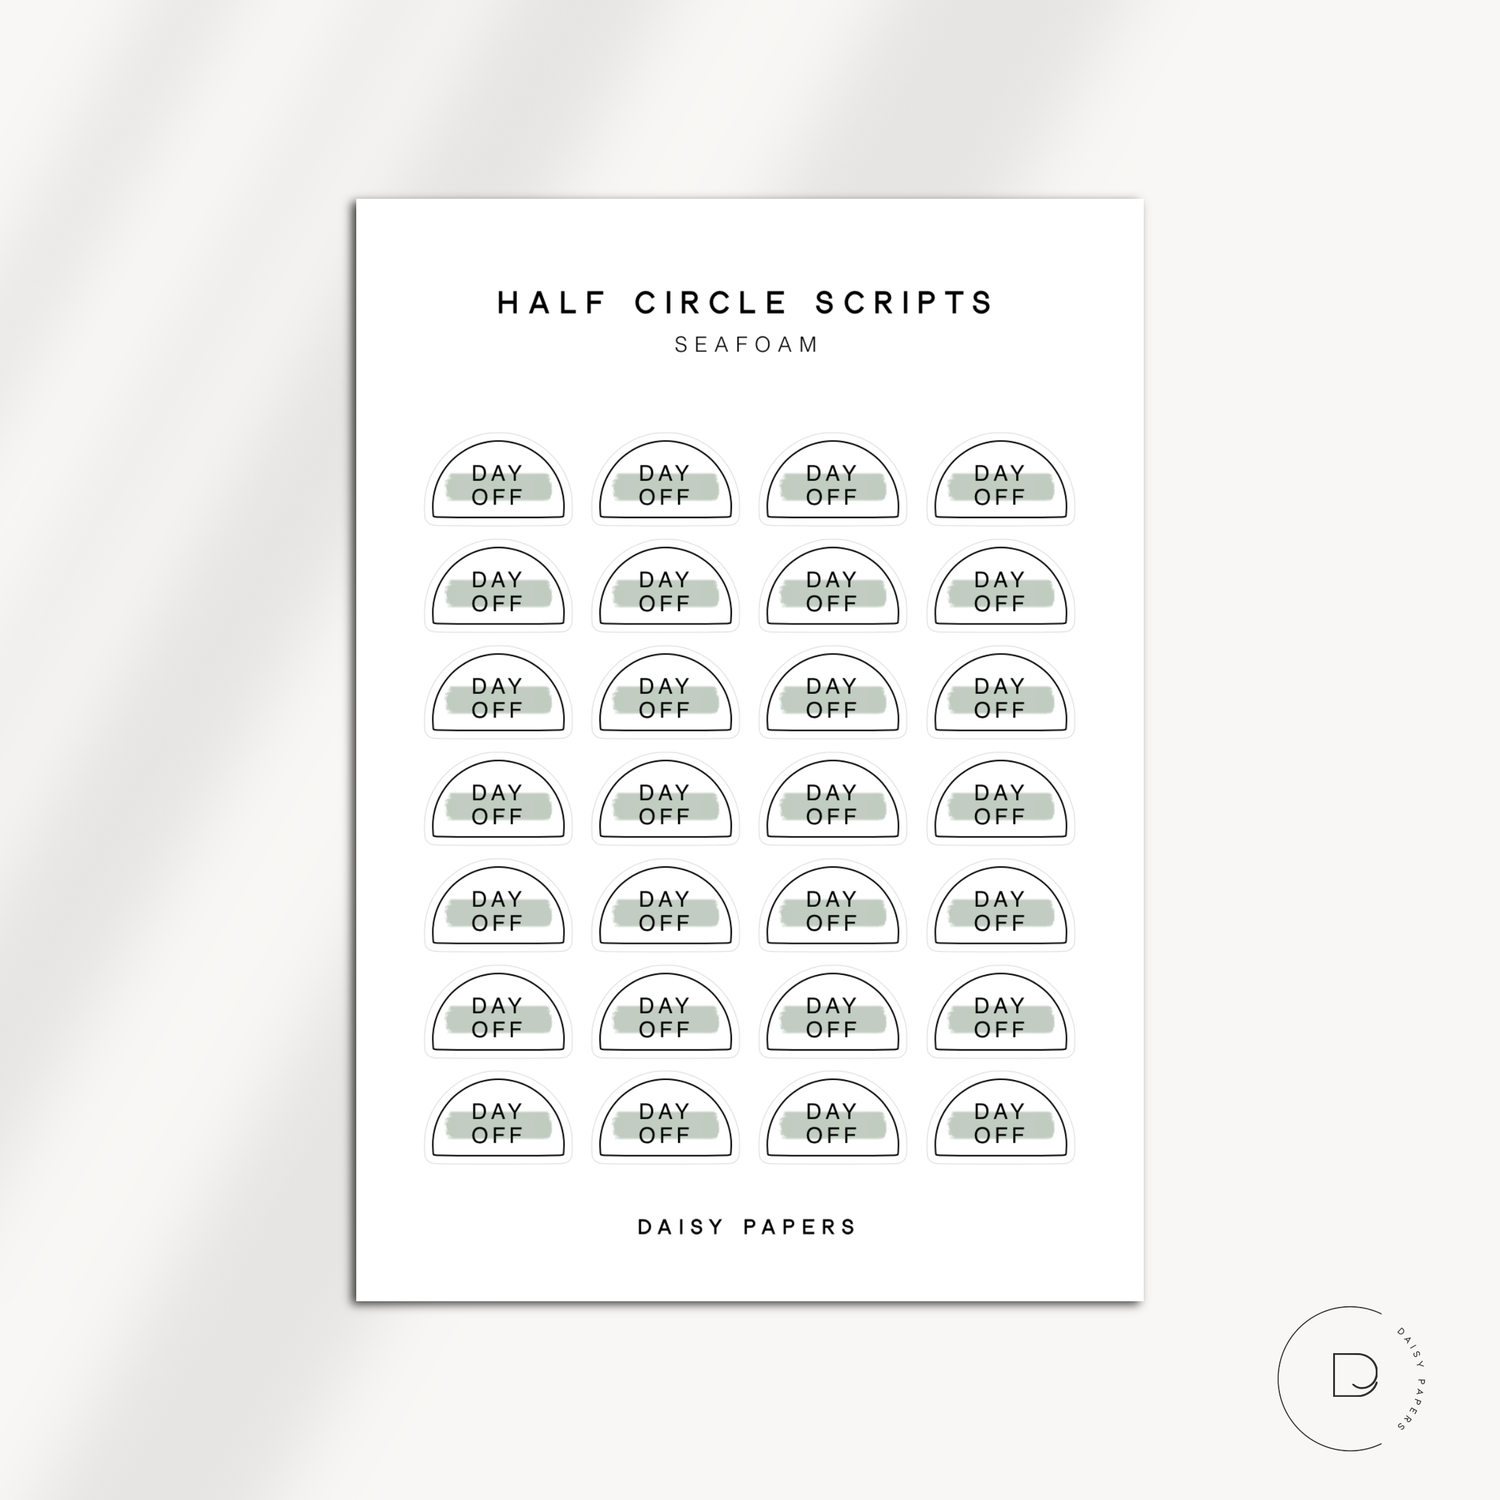 HALF CIRCLE SCRIPTS - DAY OFF